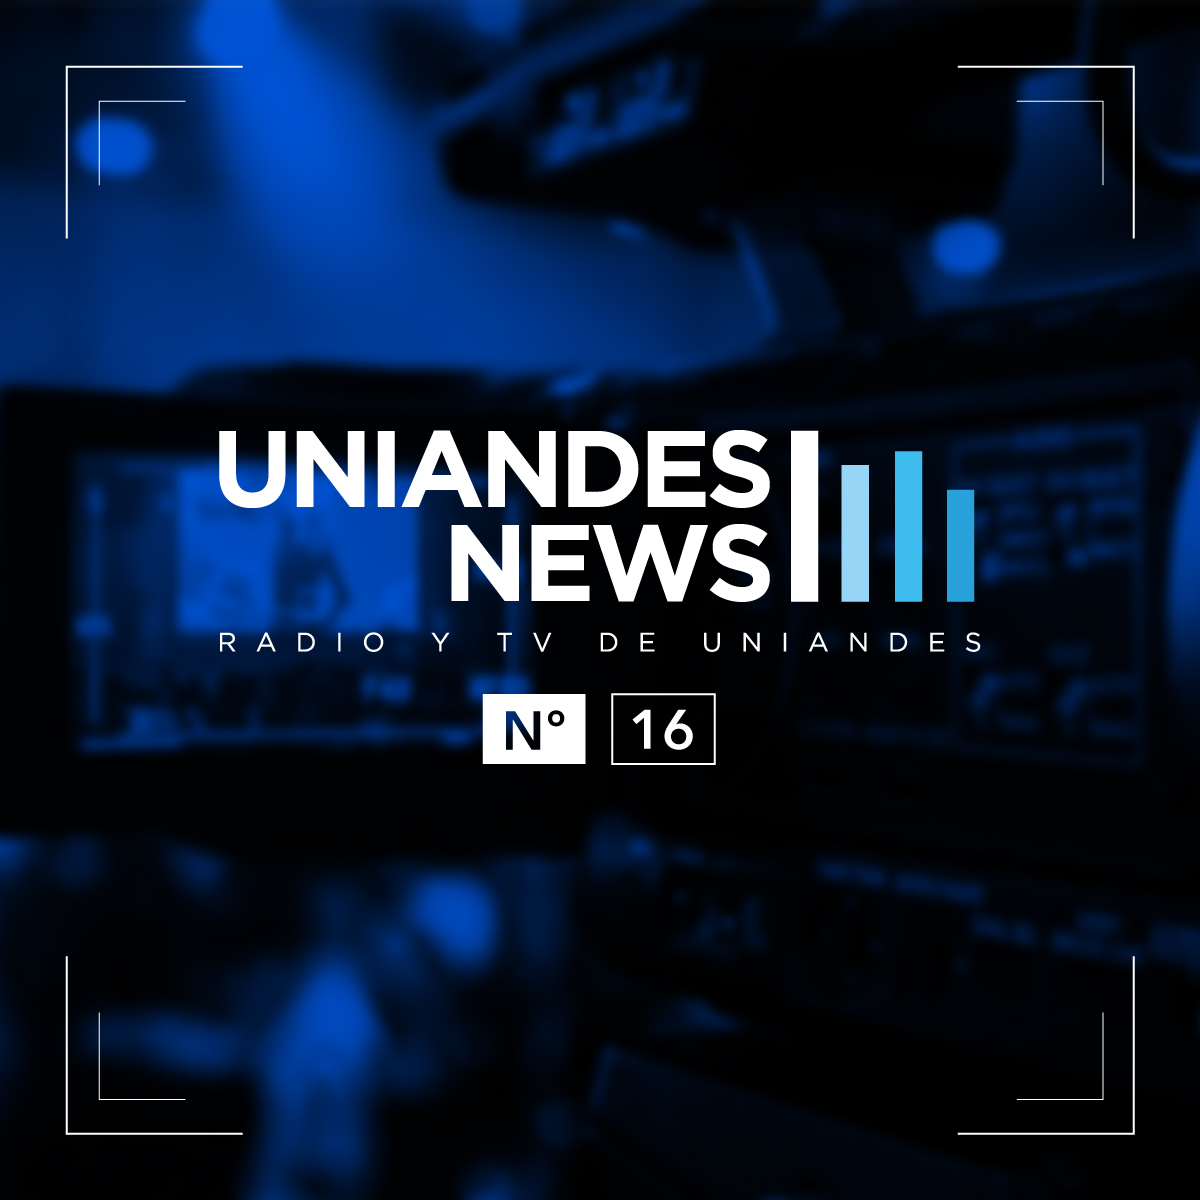 Uniandes News 16